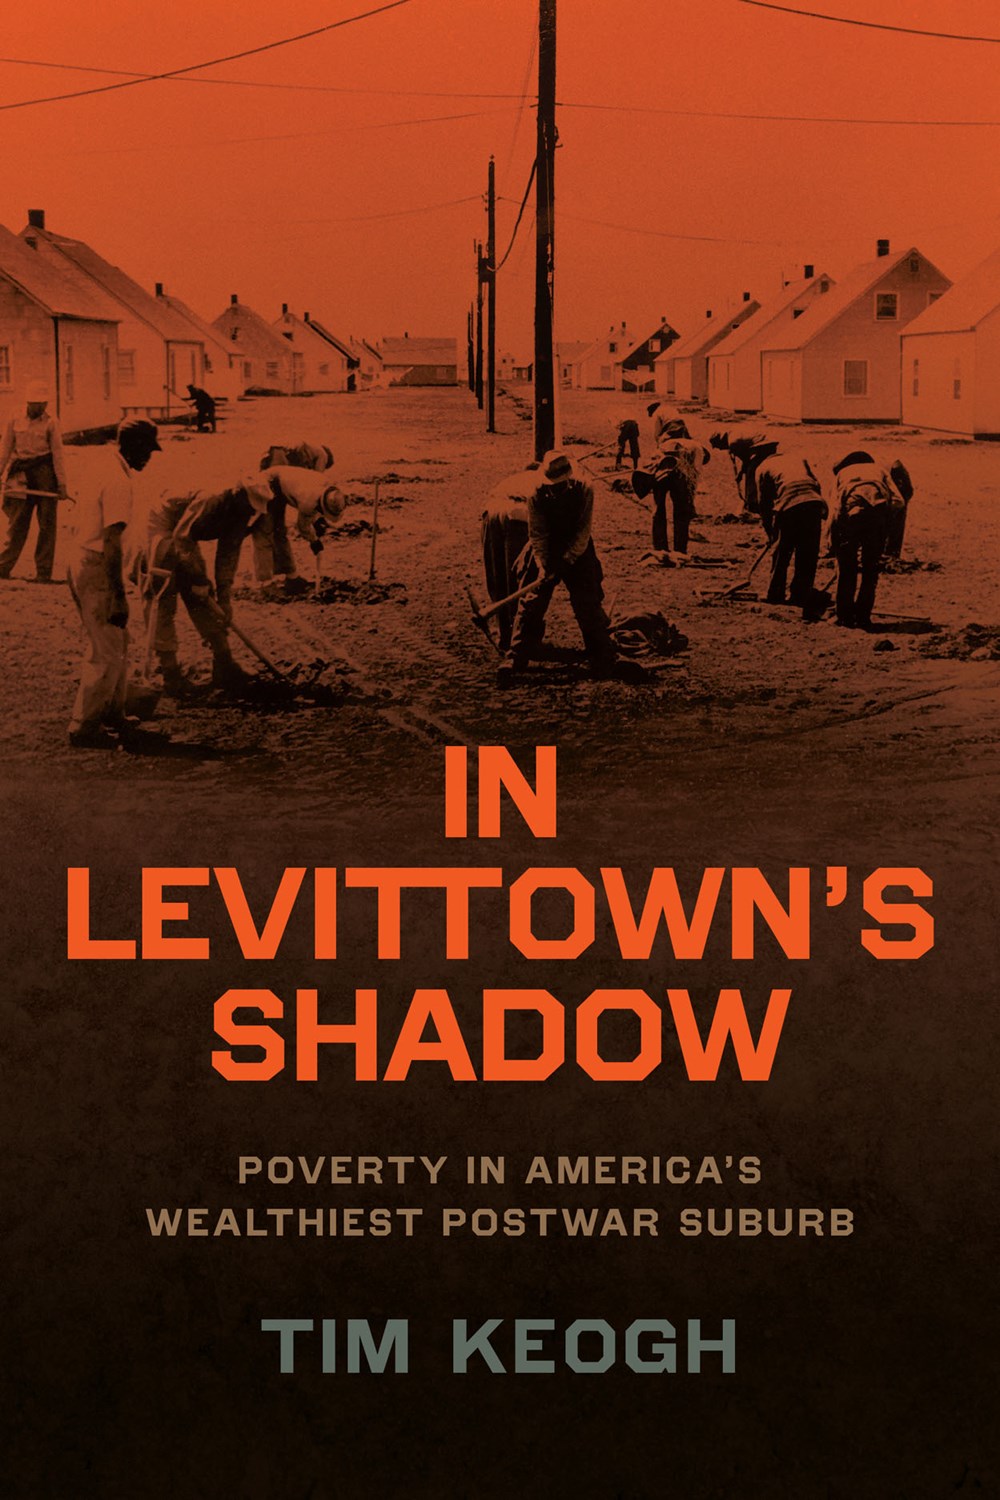 In Levittown’s Shadow: Poverty in America’s Wealthiest Postwar Suburb